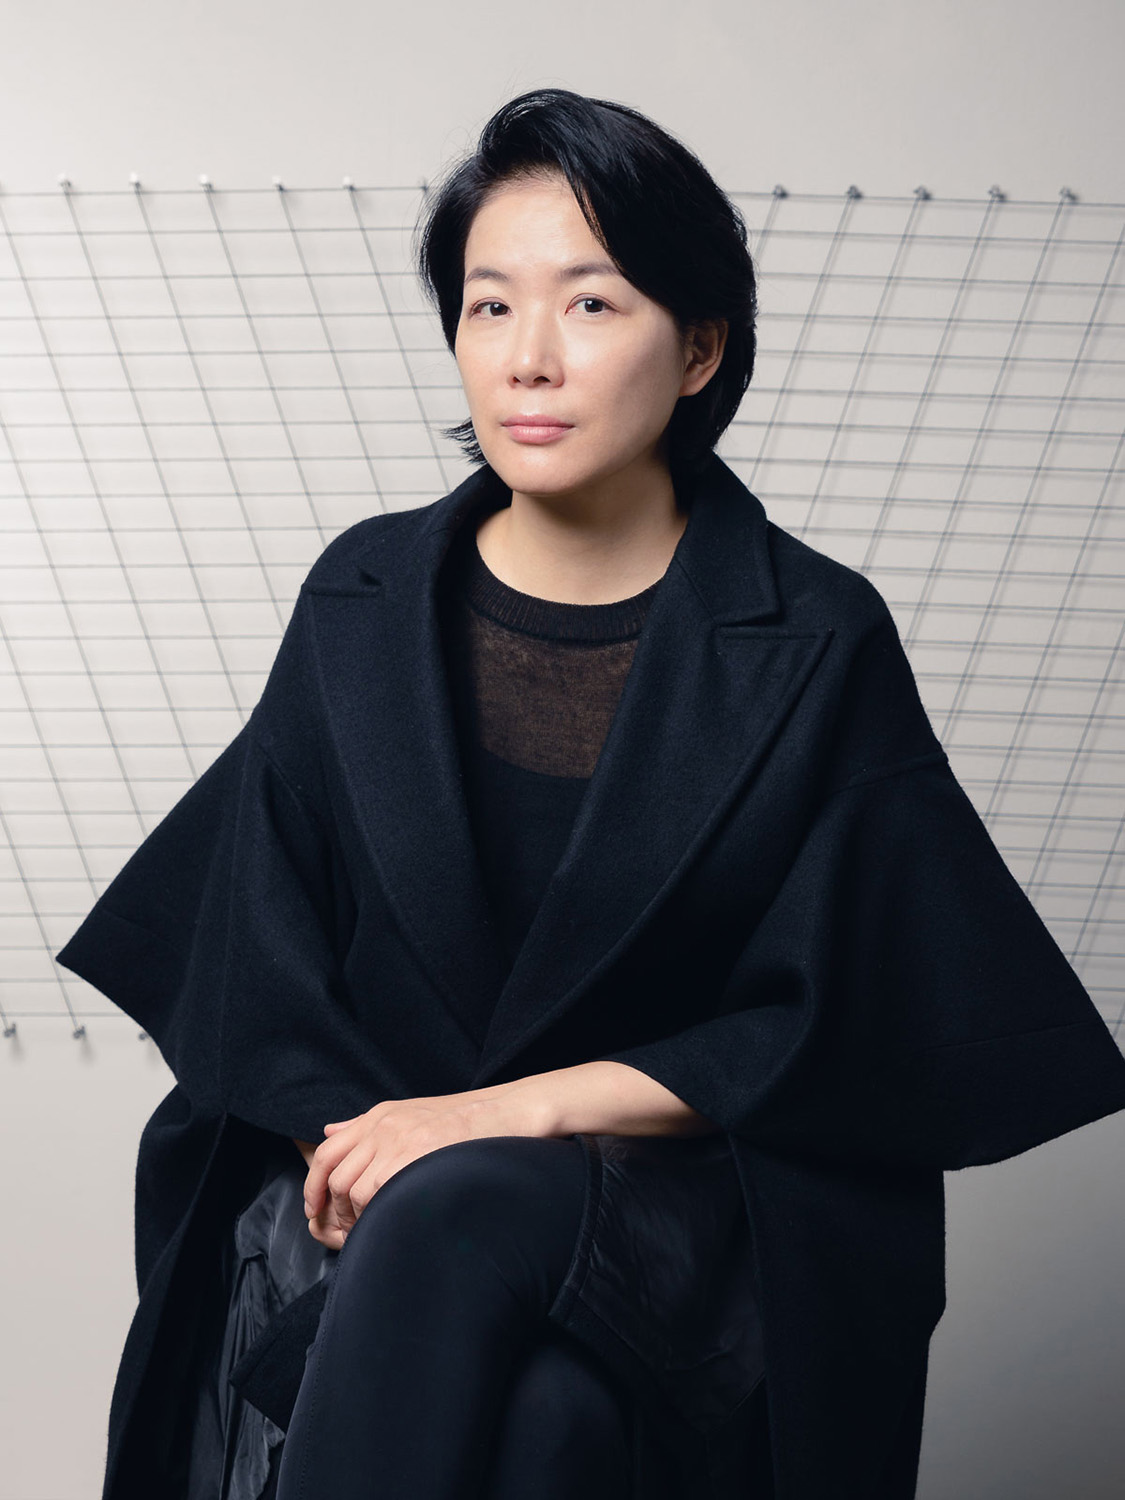 Atsuko Ninagawa, fondatrice de l’Art Week Tokyo